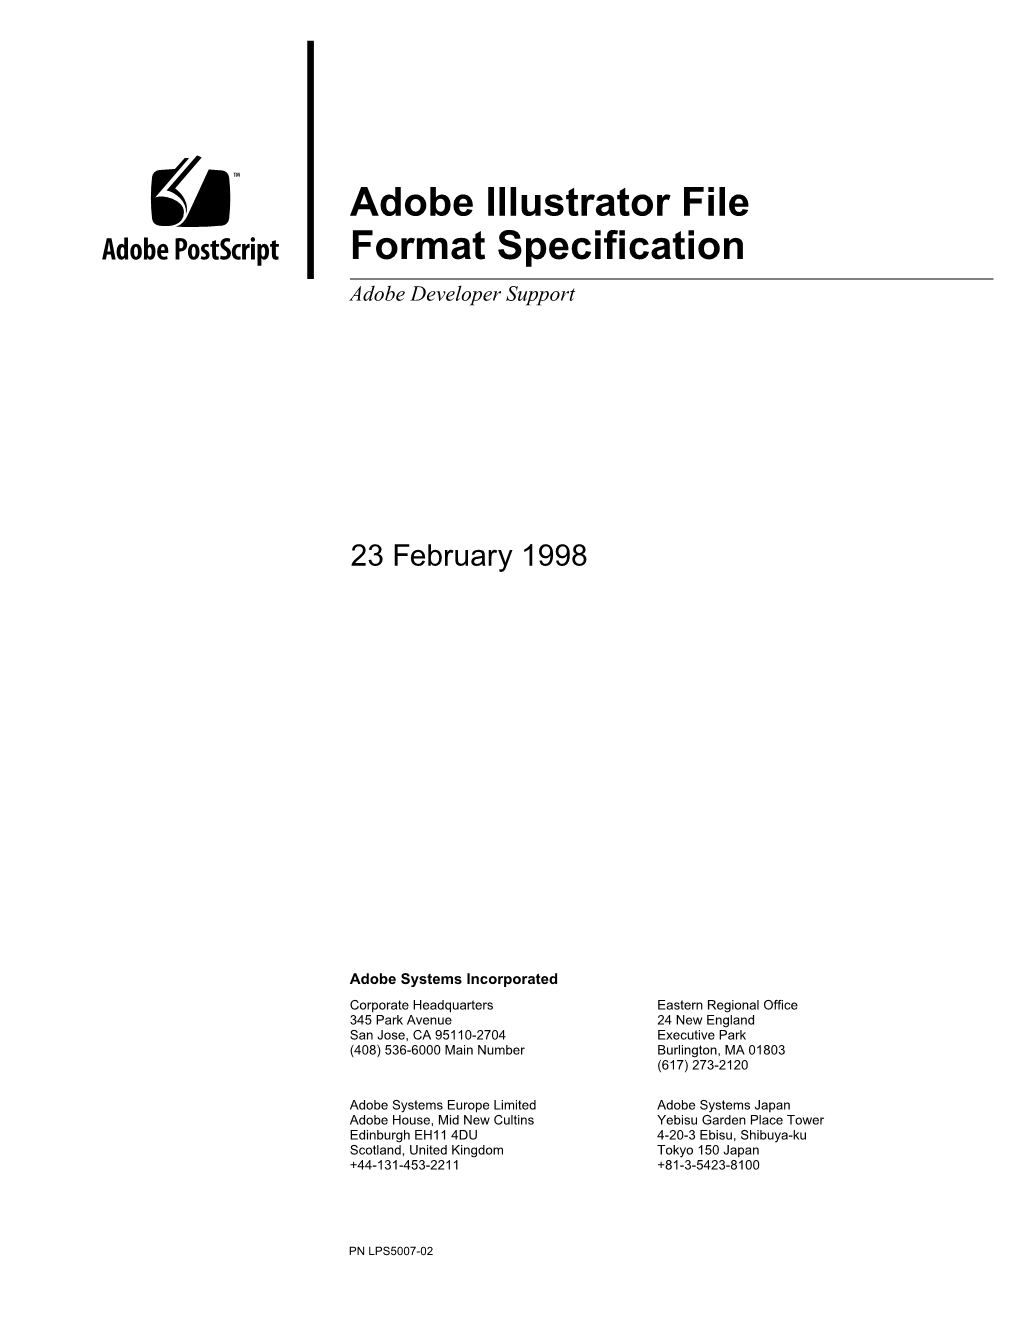 Adobe Illustrator File Format Specification 23 February 1998